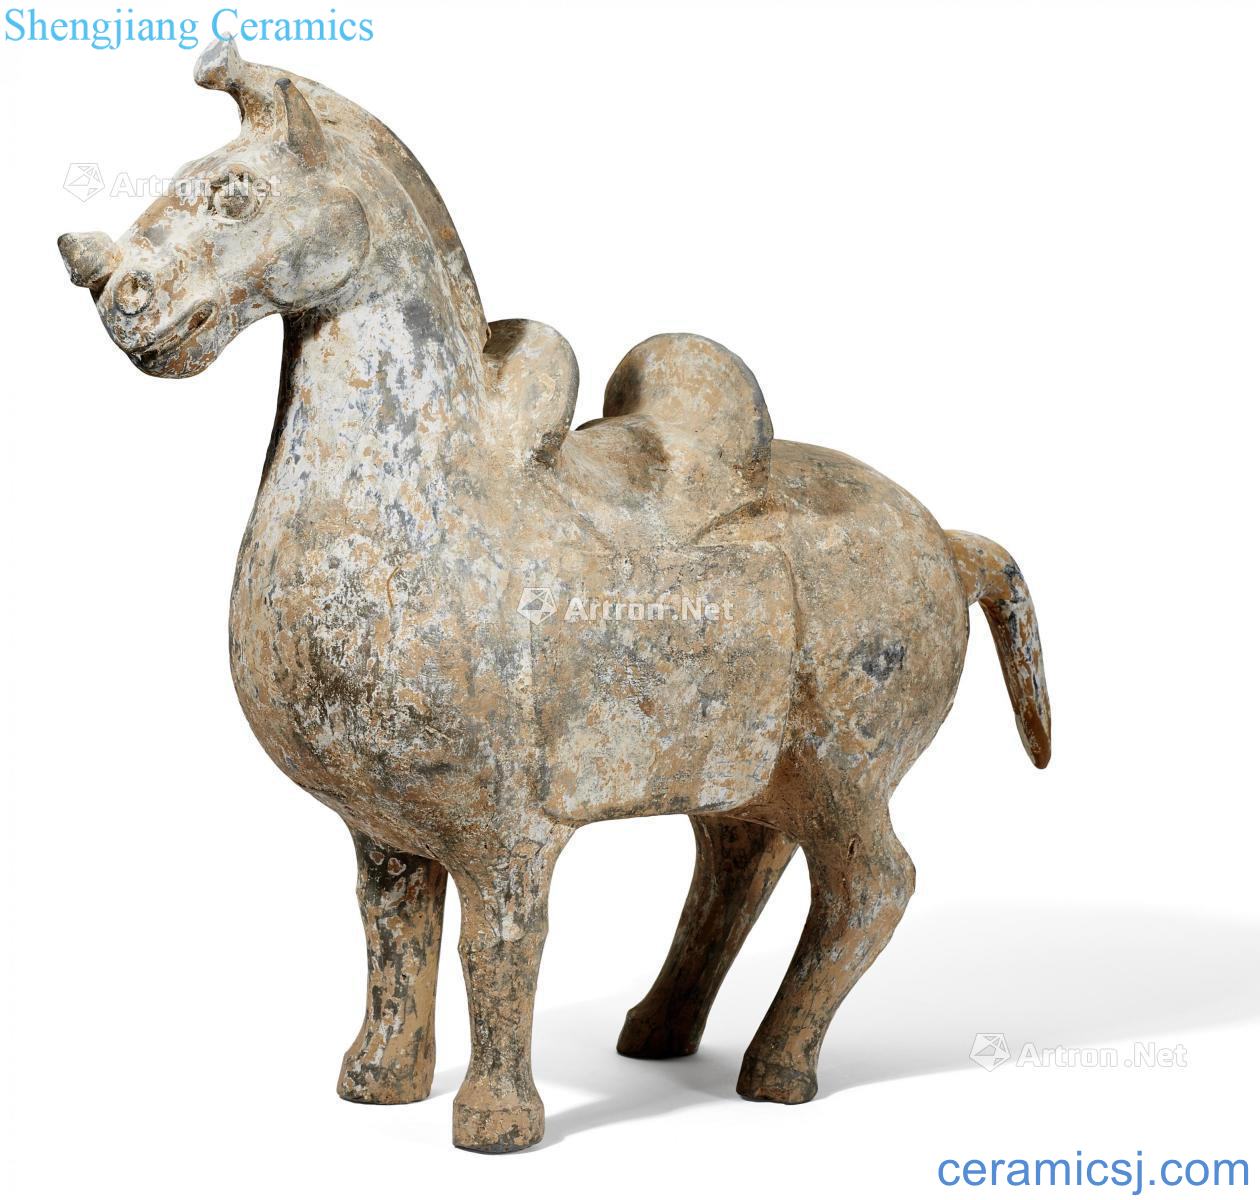 Western jin dynasty, 265-265 Pottery add horse